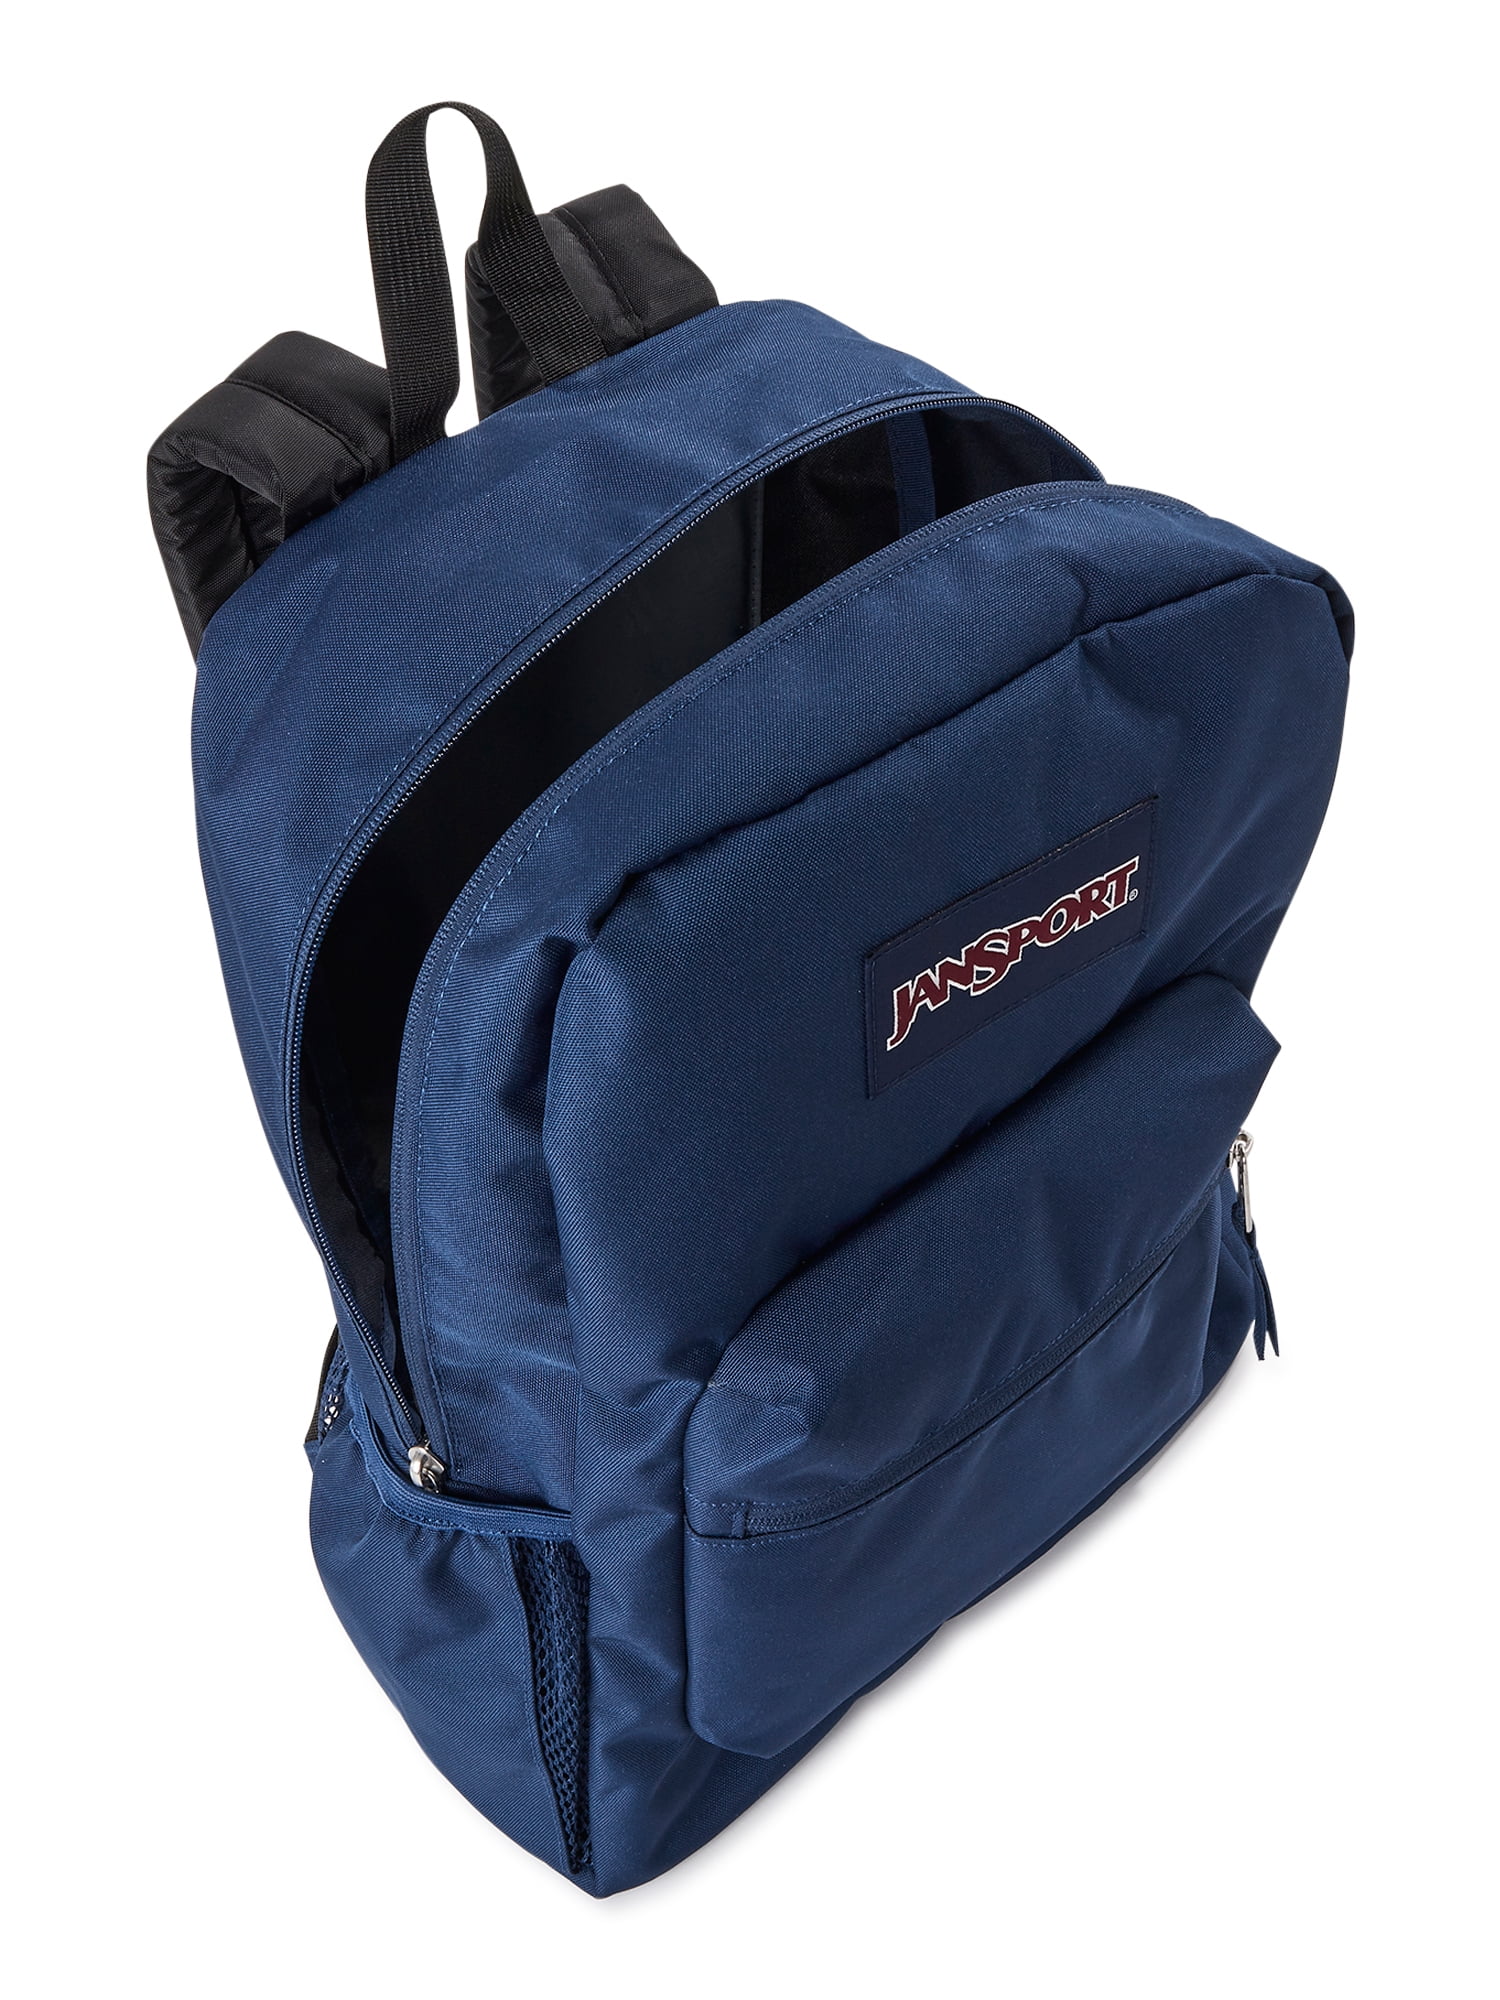 JanSport Unisex Cross Town Backpack School Bag Navy Blue